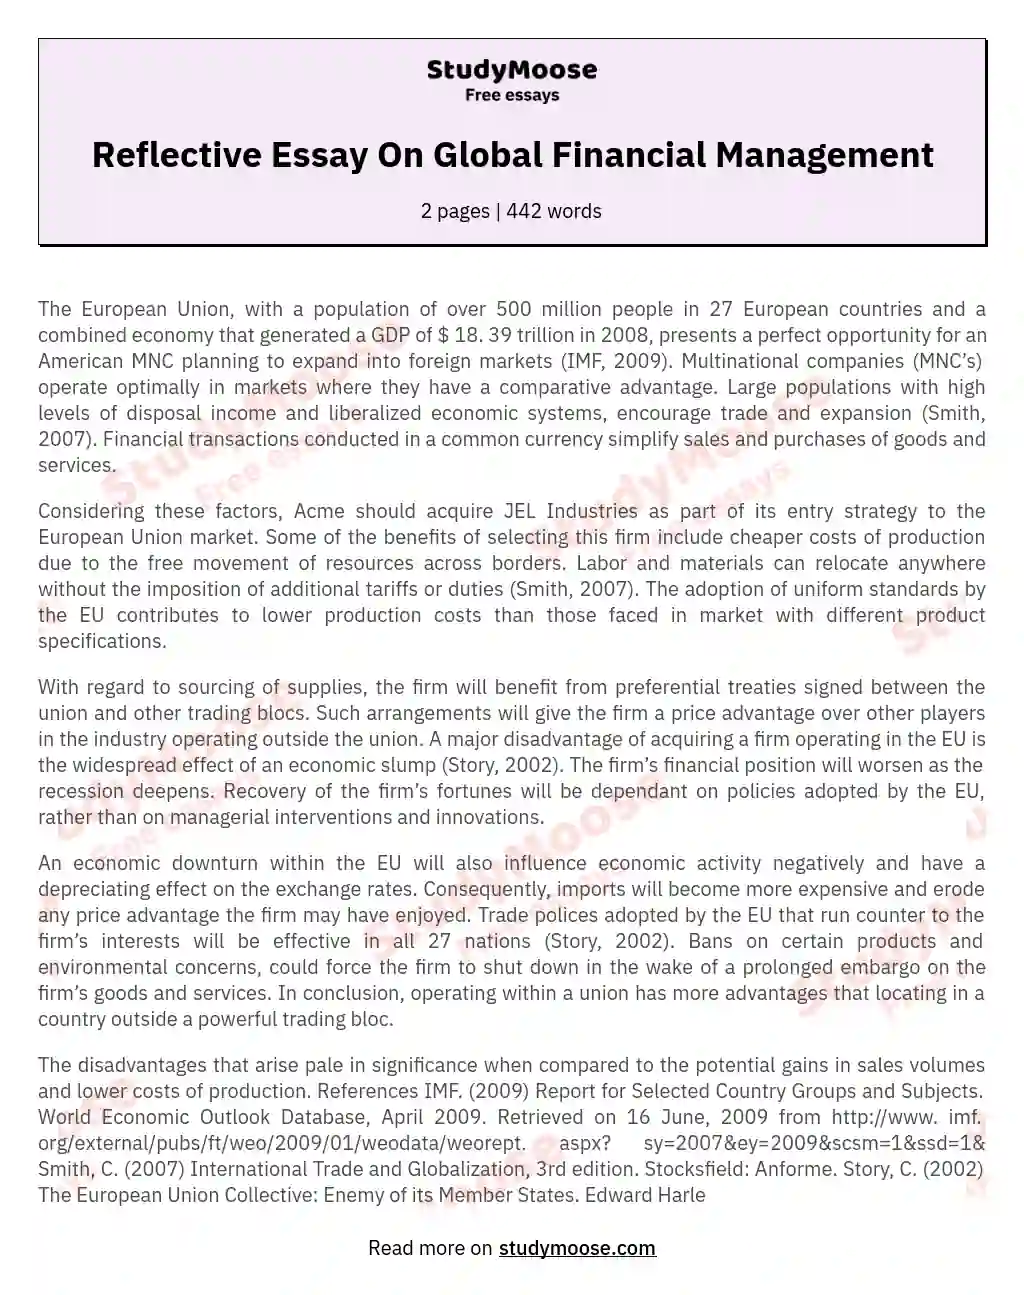 Reflective Essay On Global Financial Management essay